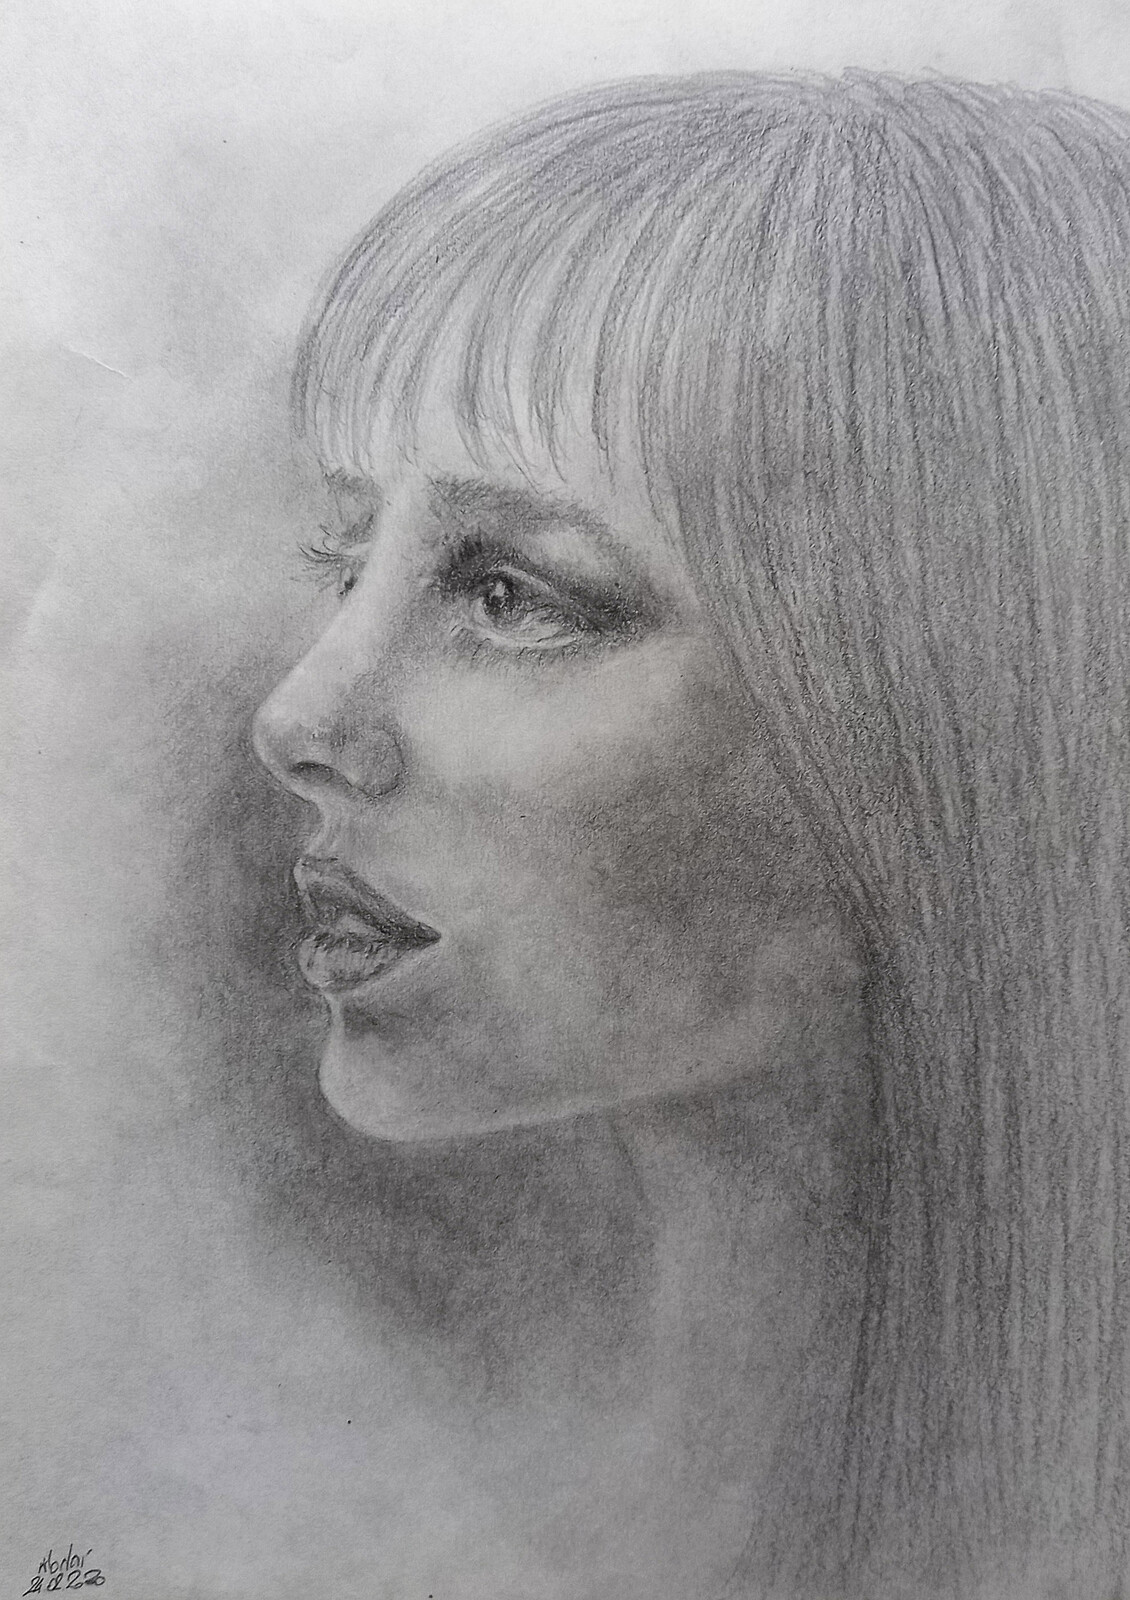 A portrait of Jane in profile - a pencil sketch